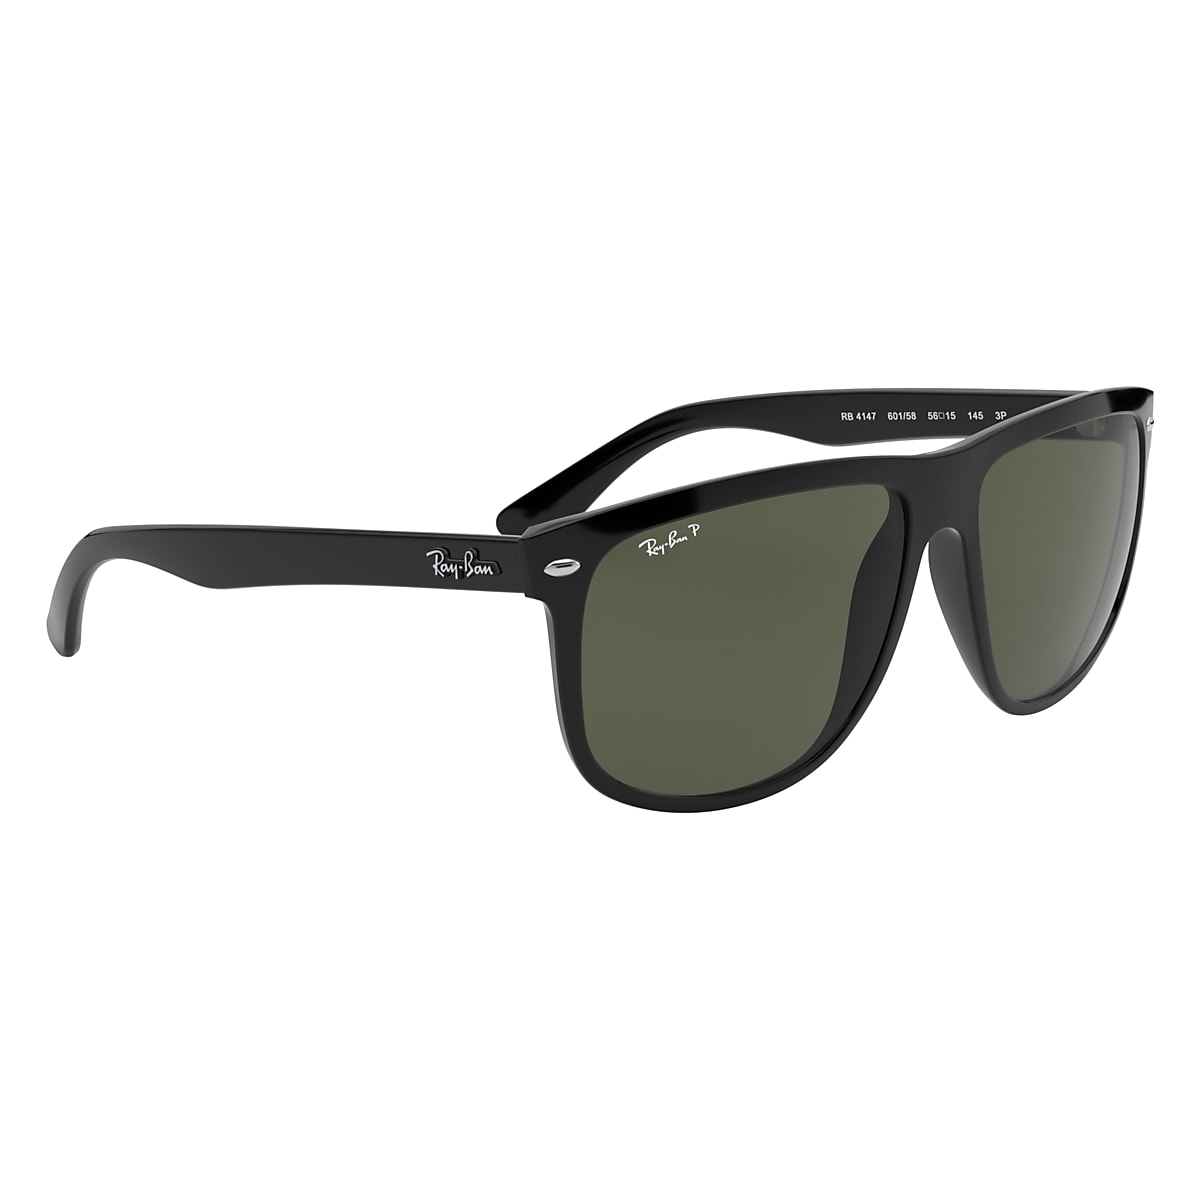 Identiteit Egomania Conjugeren BOYFRIEND Sunglasses in Black and Dark Green - RB4147 | Ray-Ban® US